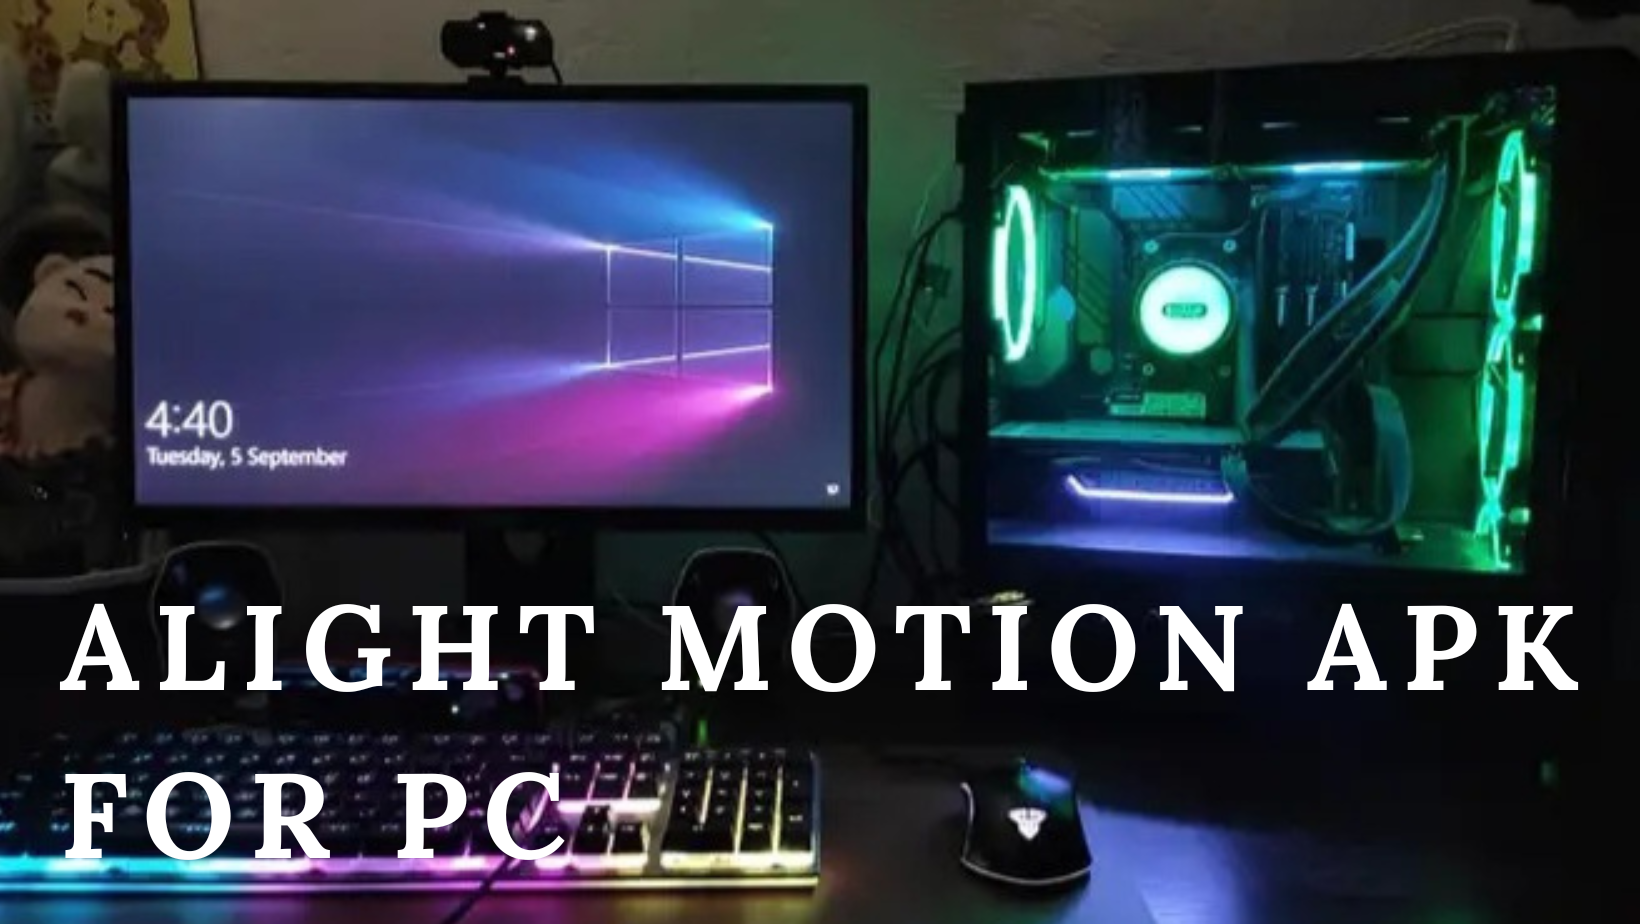 Alight Motion APK For PC